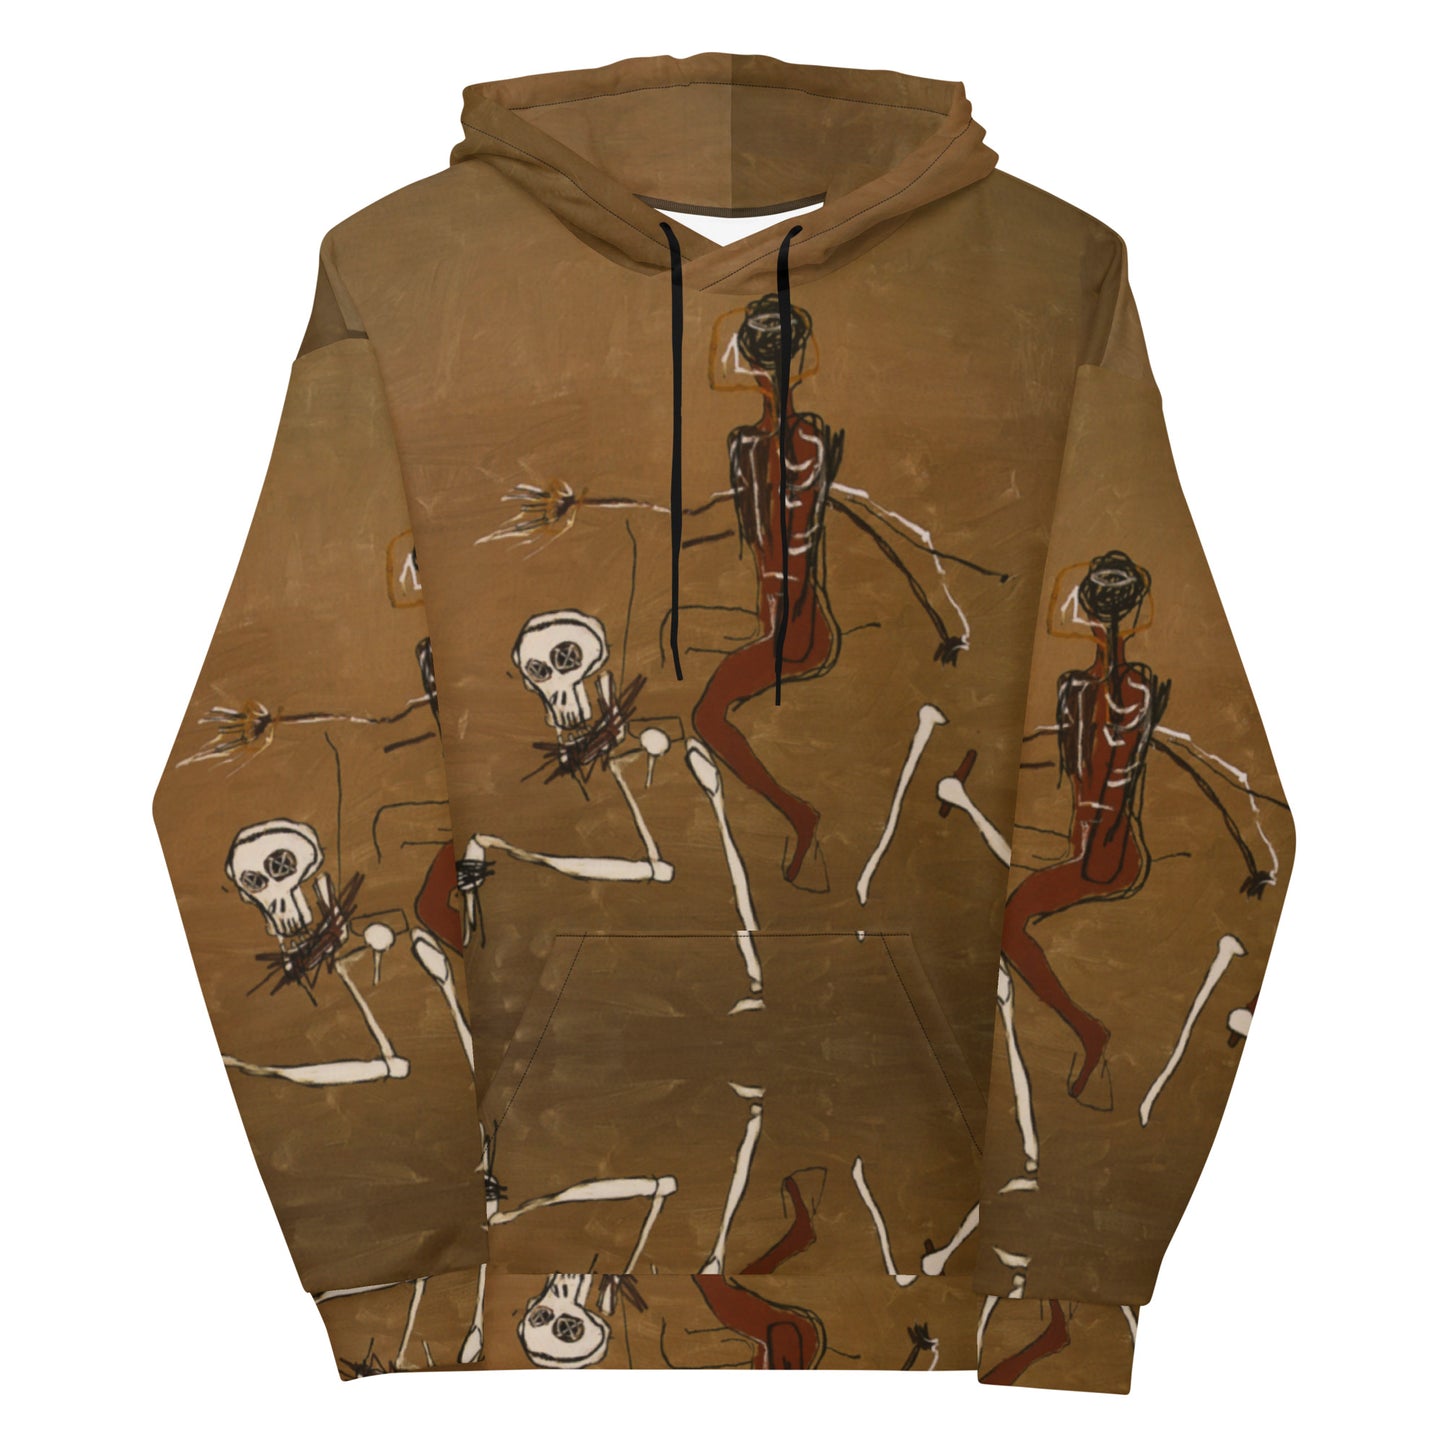 Jean-Michel Basquiat "Riding With Death" Artwork Printed Premium Streetwear Sweatshirt Hoodie Harajuku Graffiti